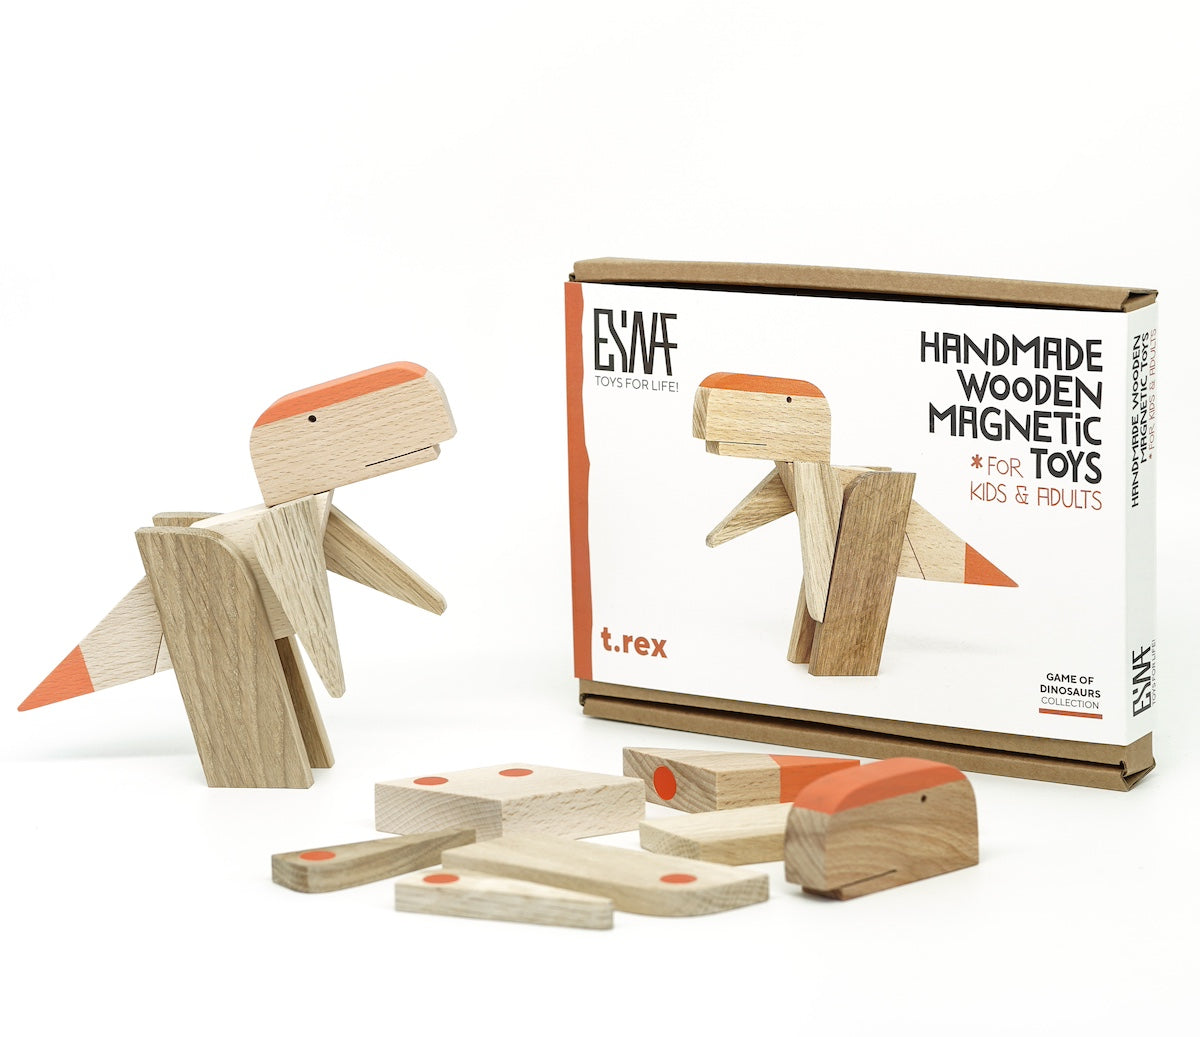 ESNAF-t.rex-wooden-magnetic-fossil-toy